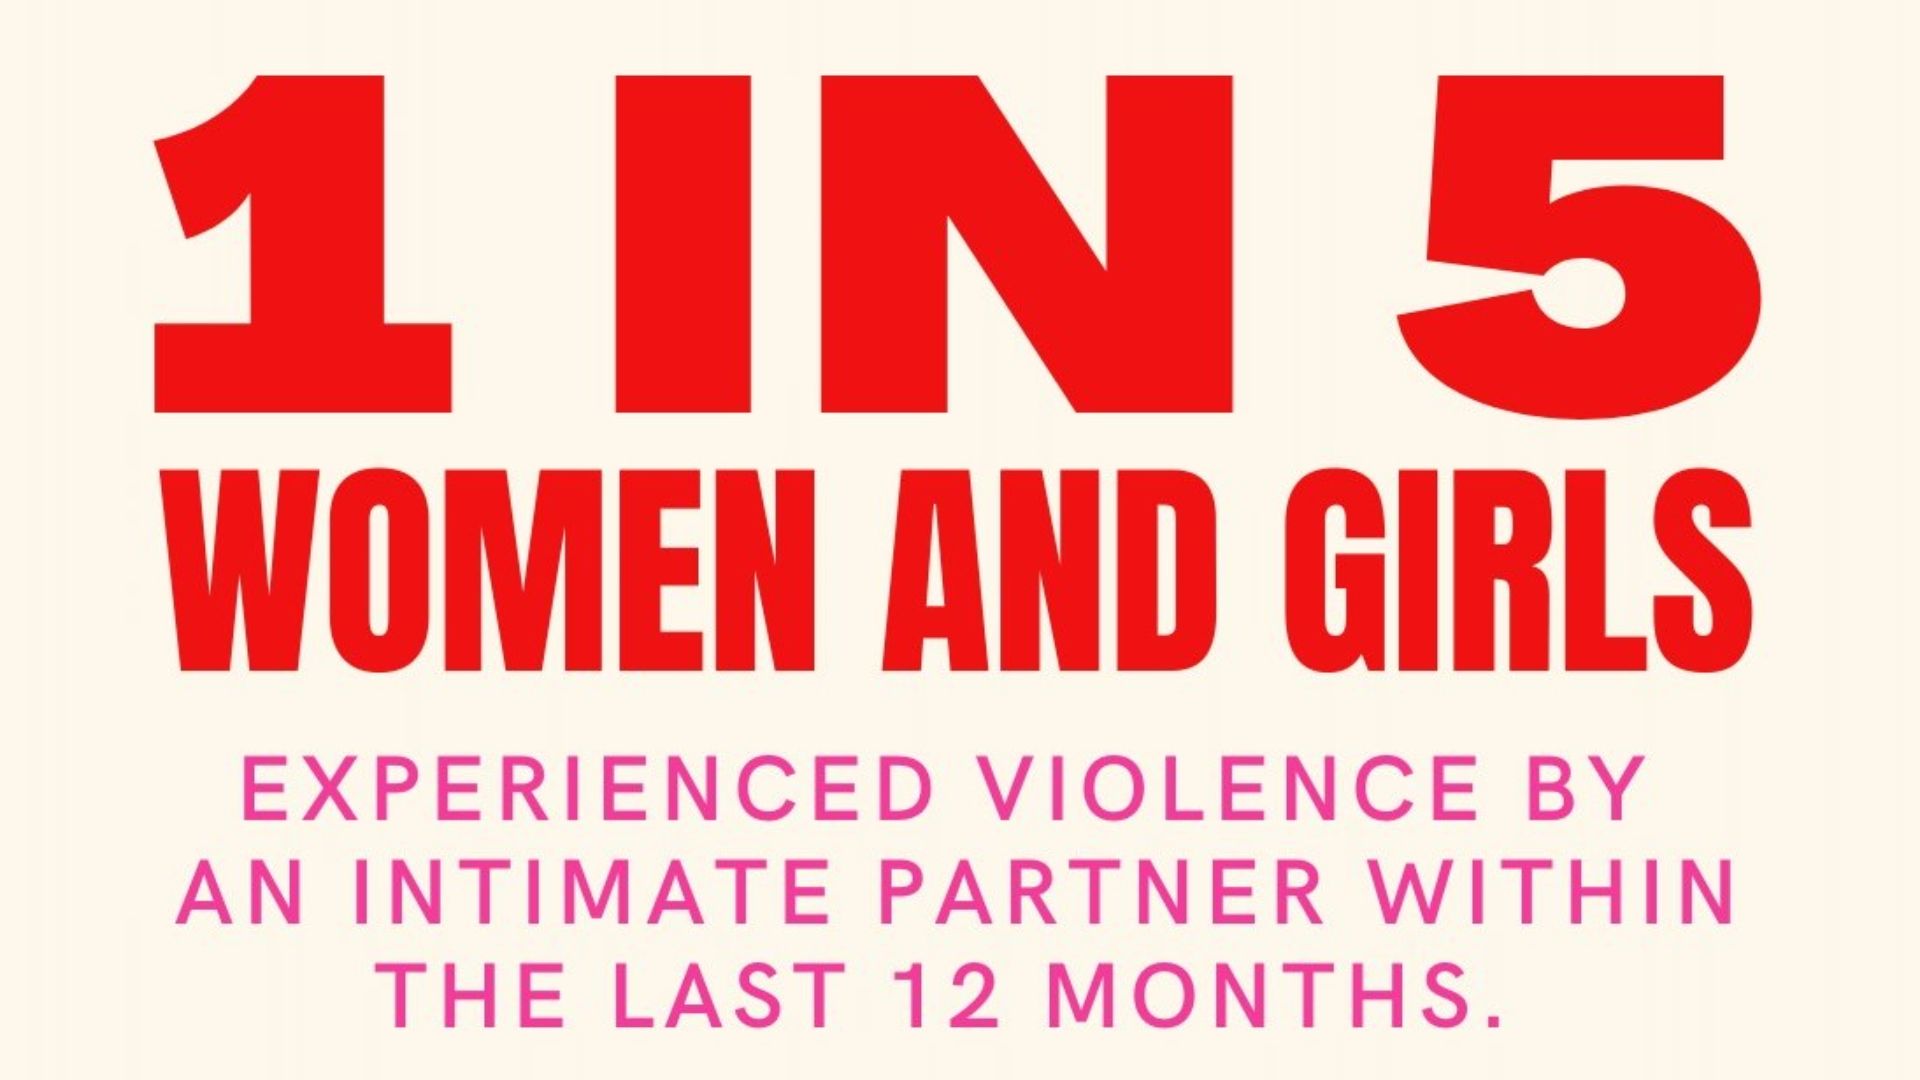 Webinar will tackle violence against women in regional Australia